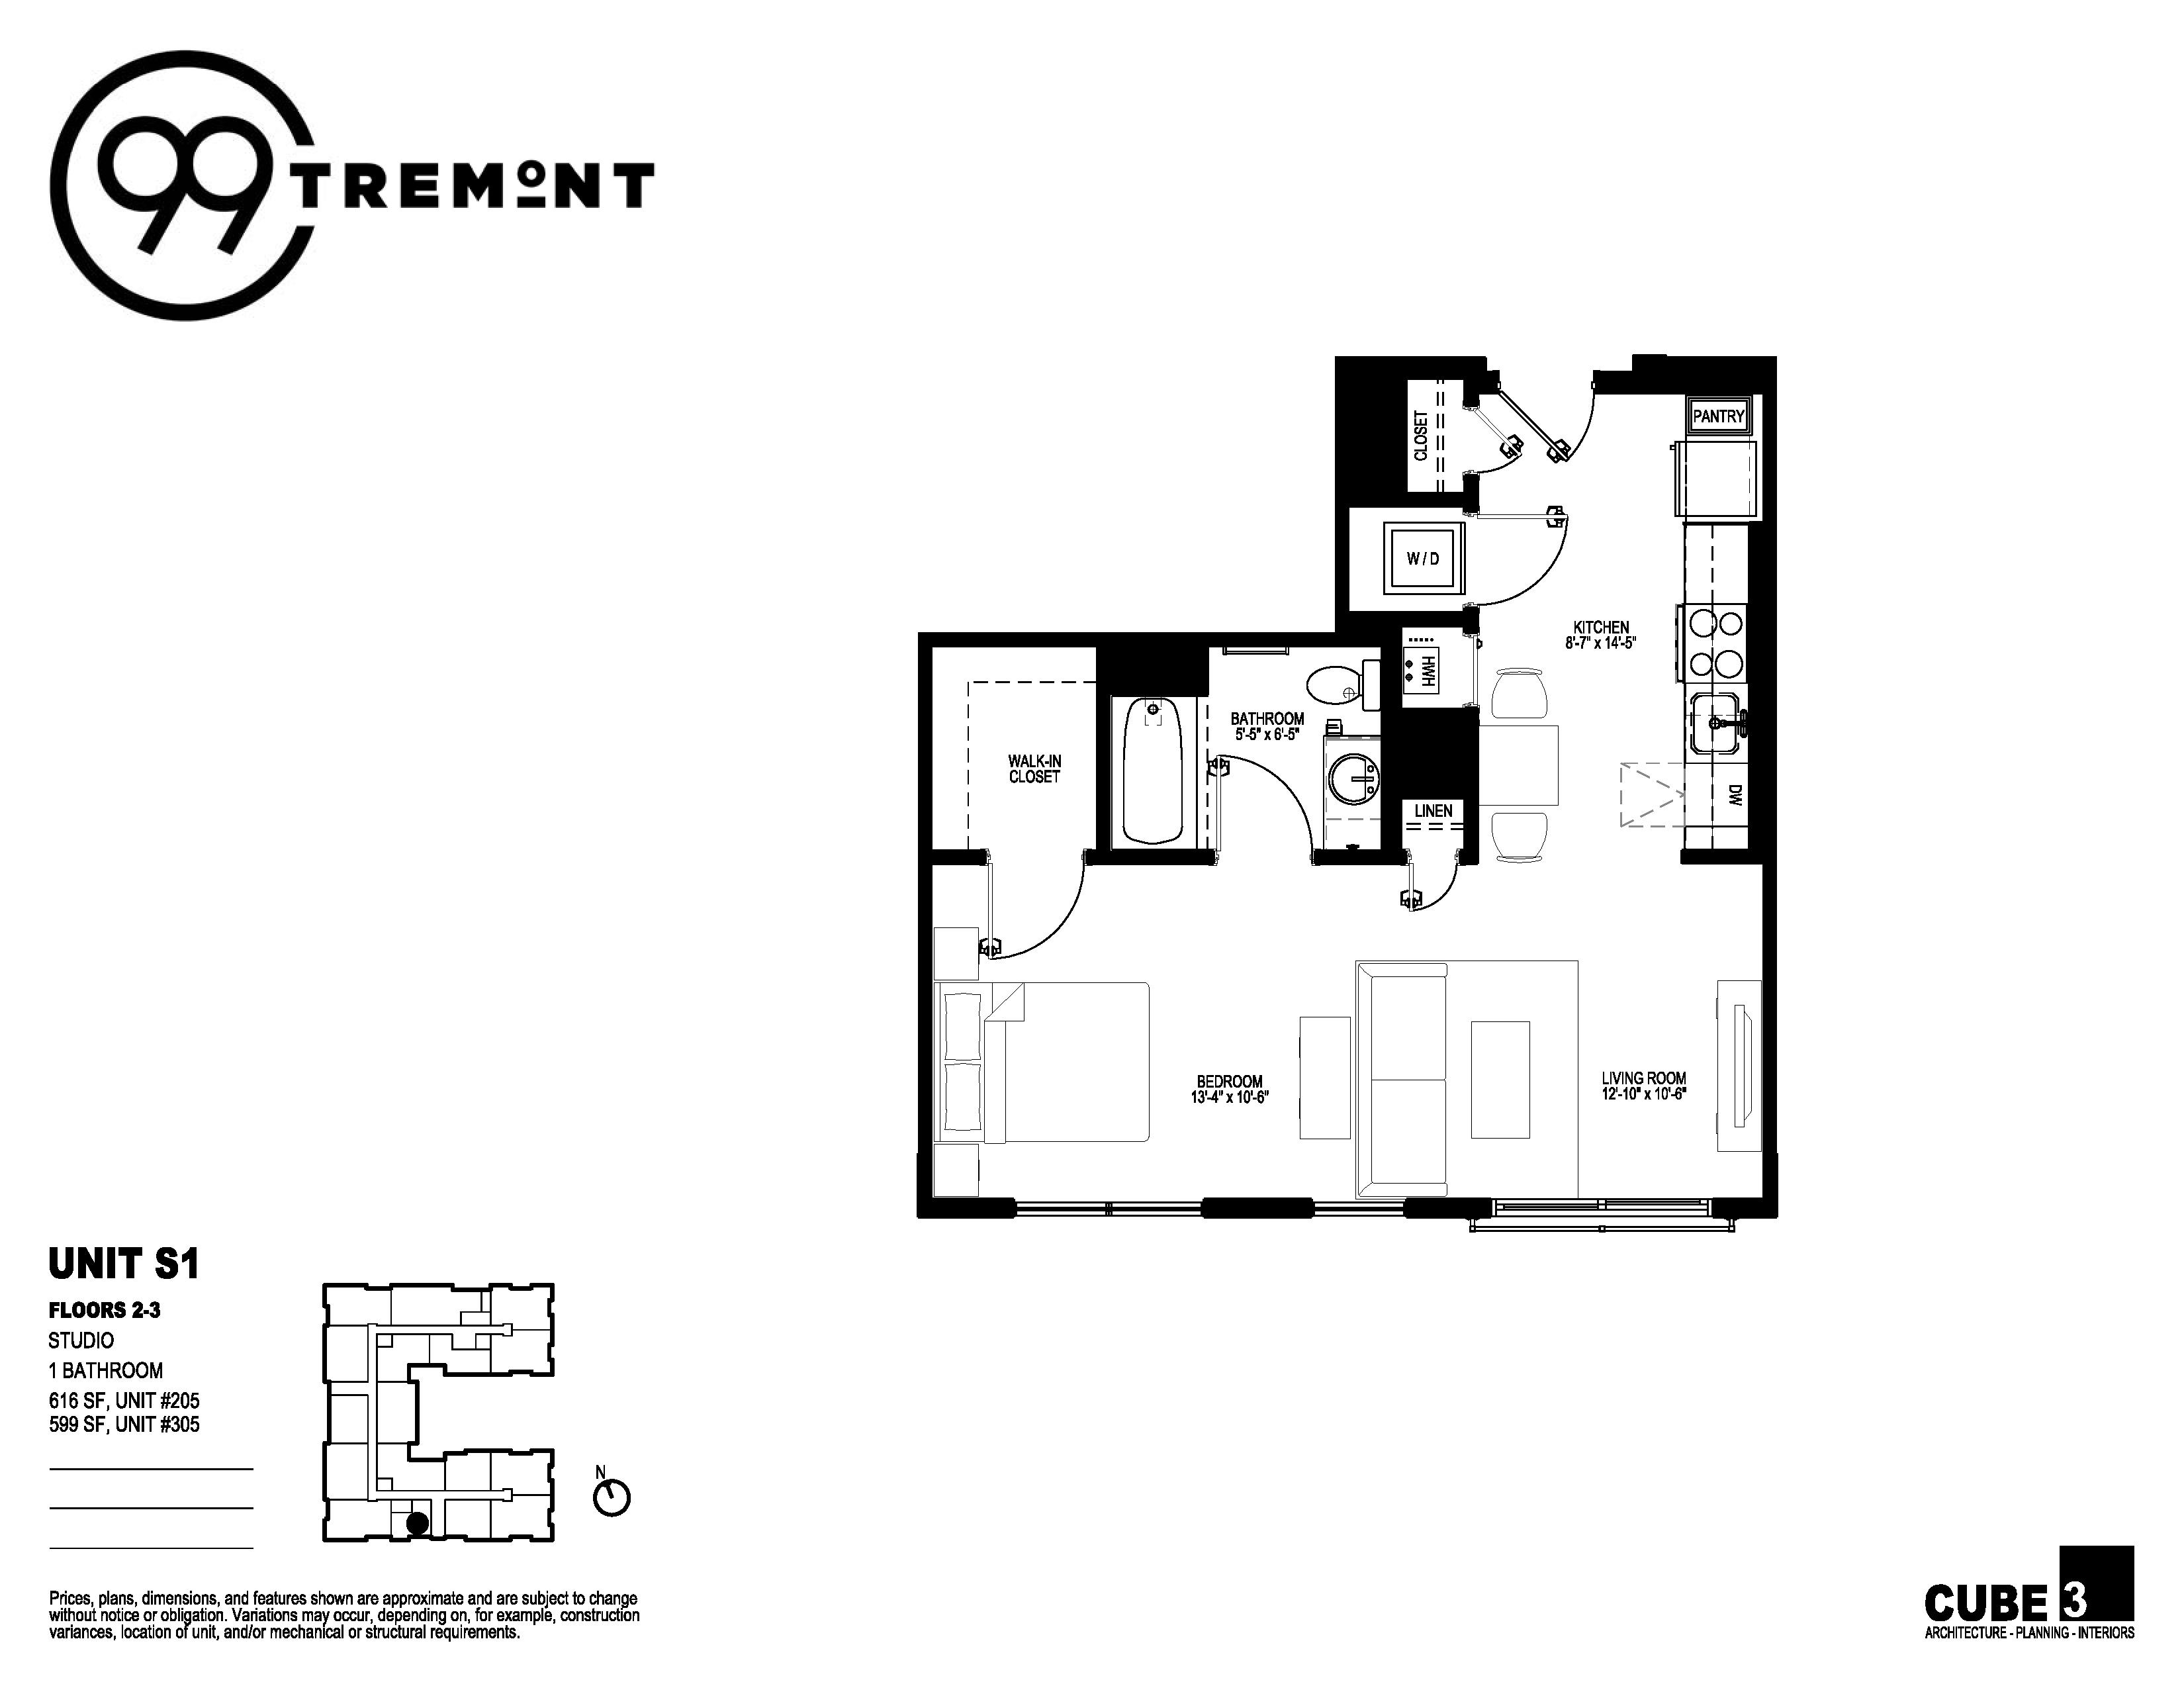 99 Tremont Residences Floor plan